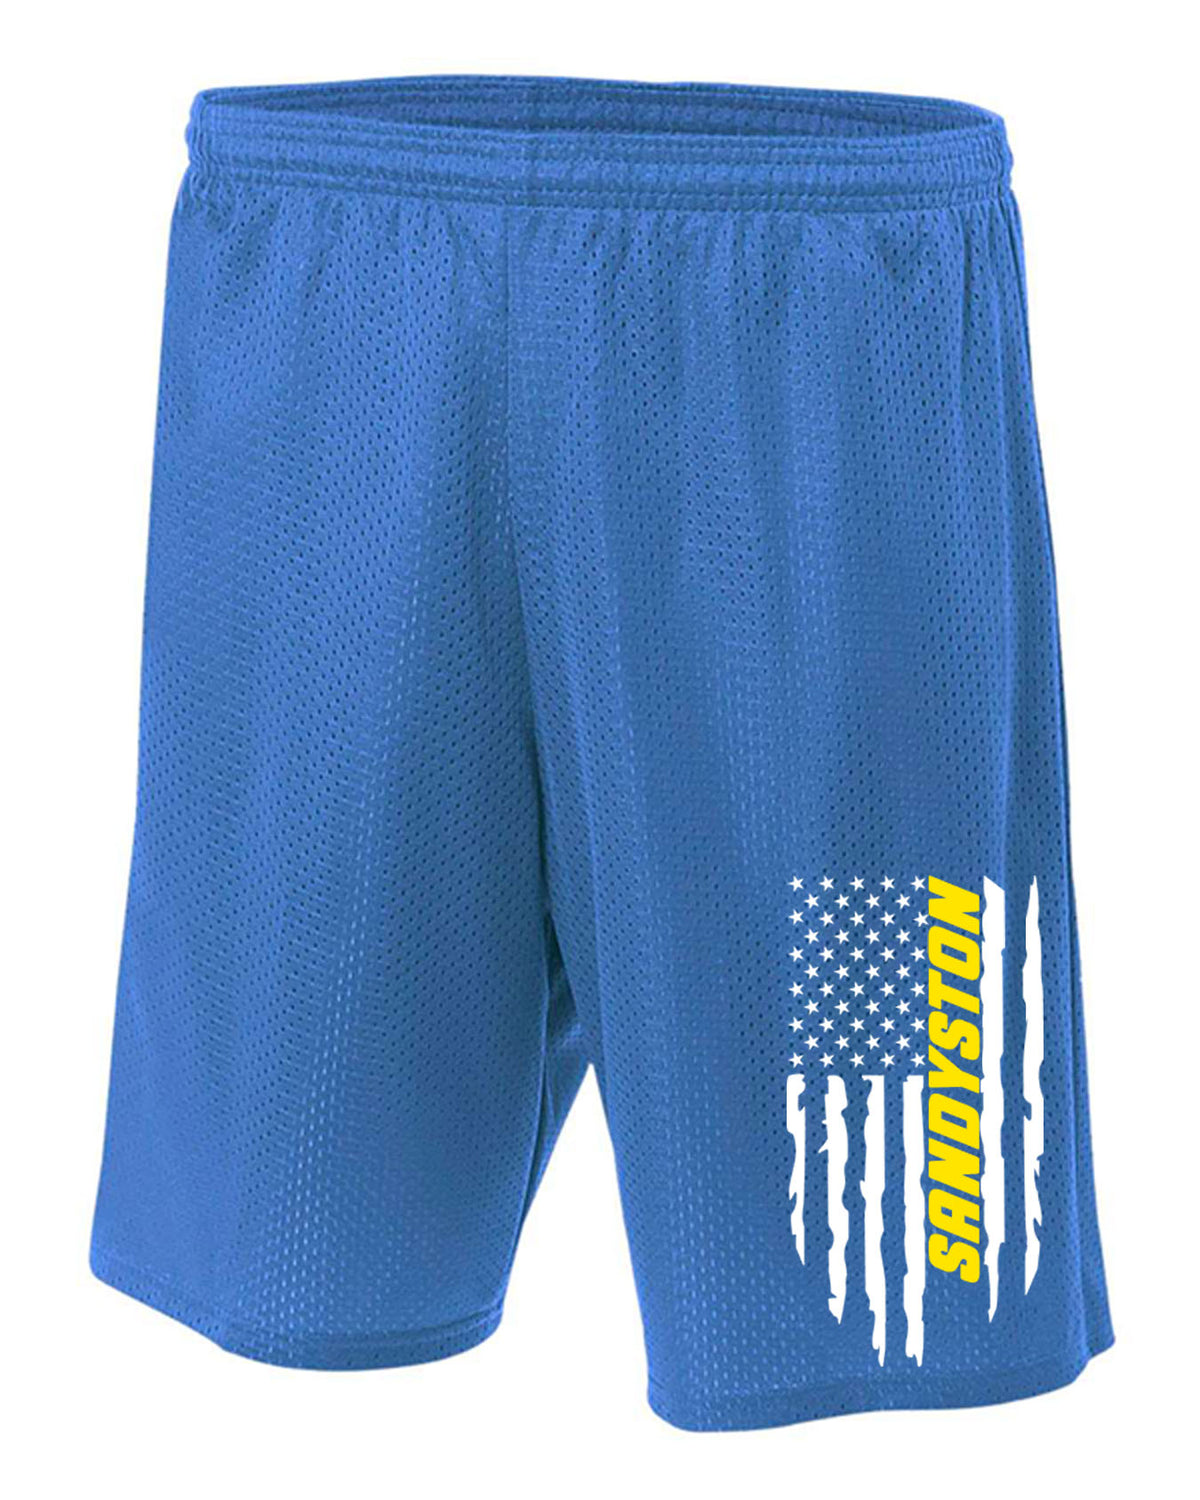 Sandyston Walpack Design 17 Mesh Shorts